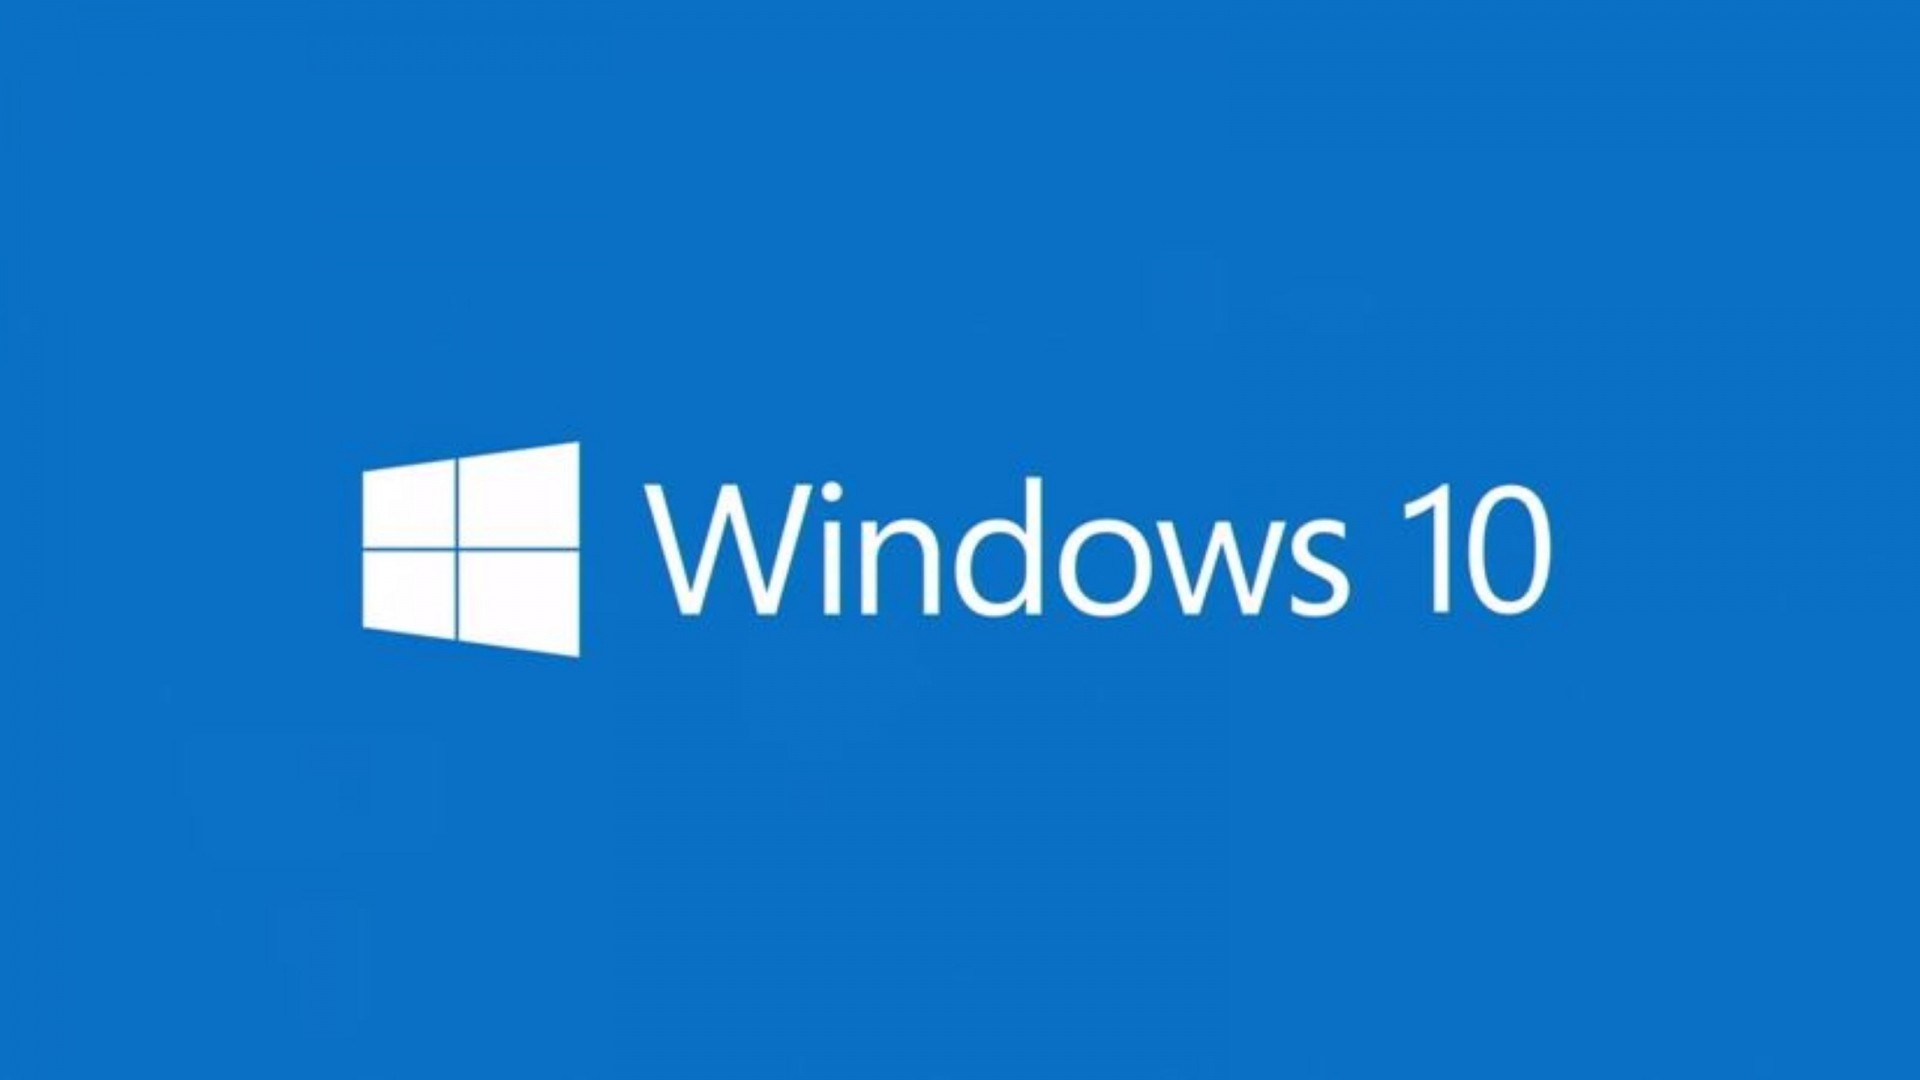 Windows 10 wallpaper HD 1080p ·① Download free beautiful ...